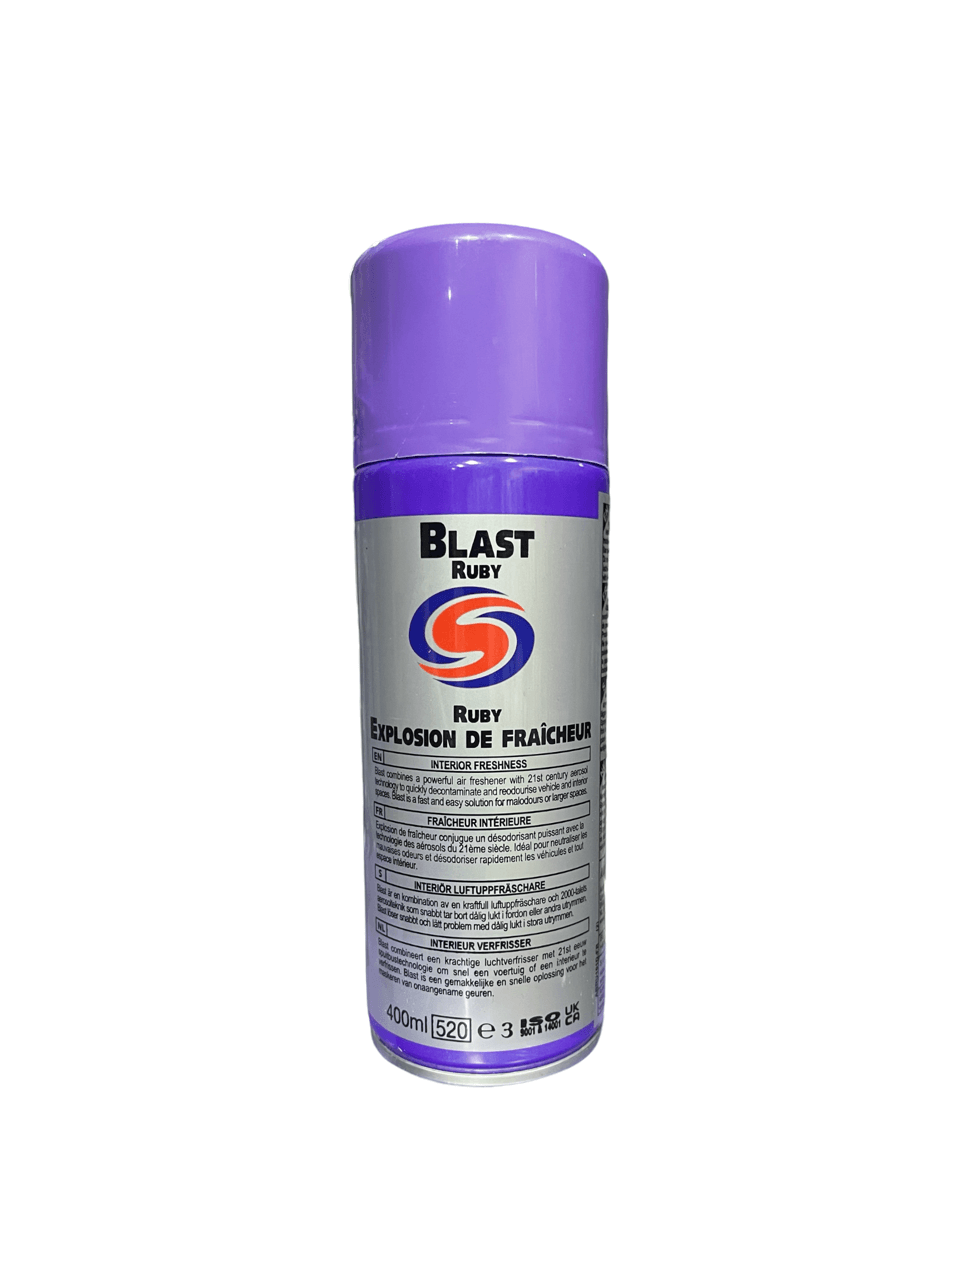 Blast Ruby - Interior Fragrance 400ml